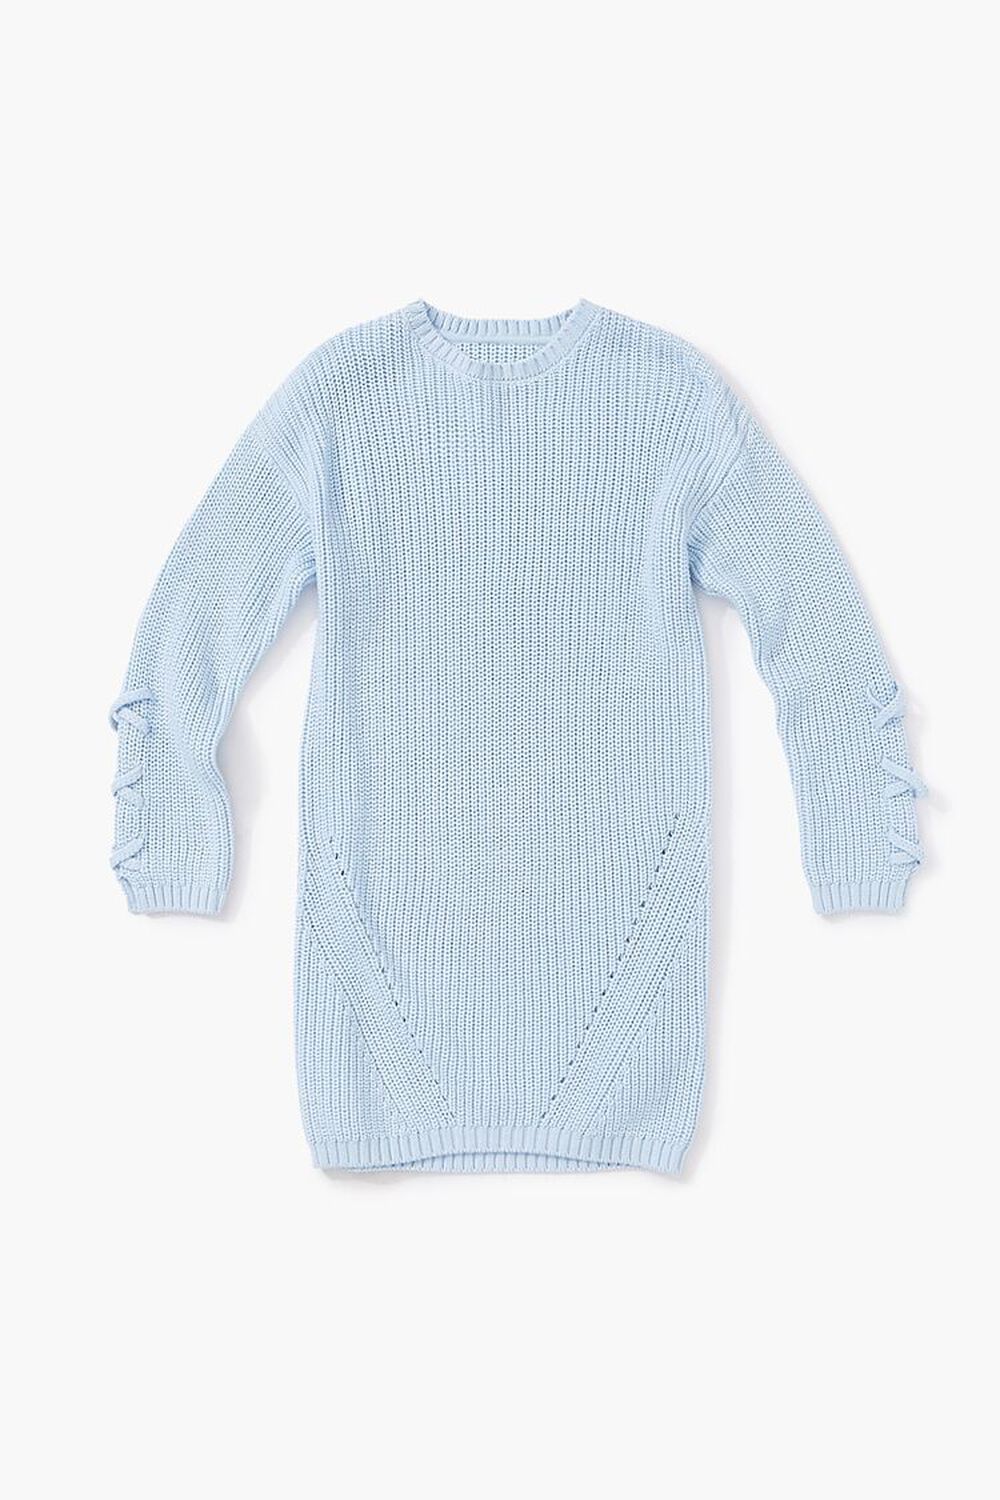 BLUE Girls Sweater Dress (Kids), image 1